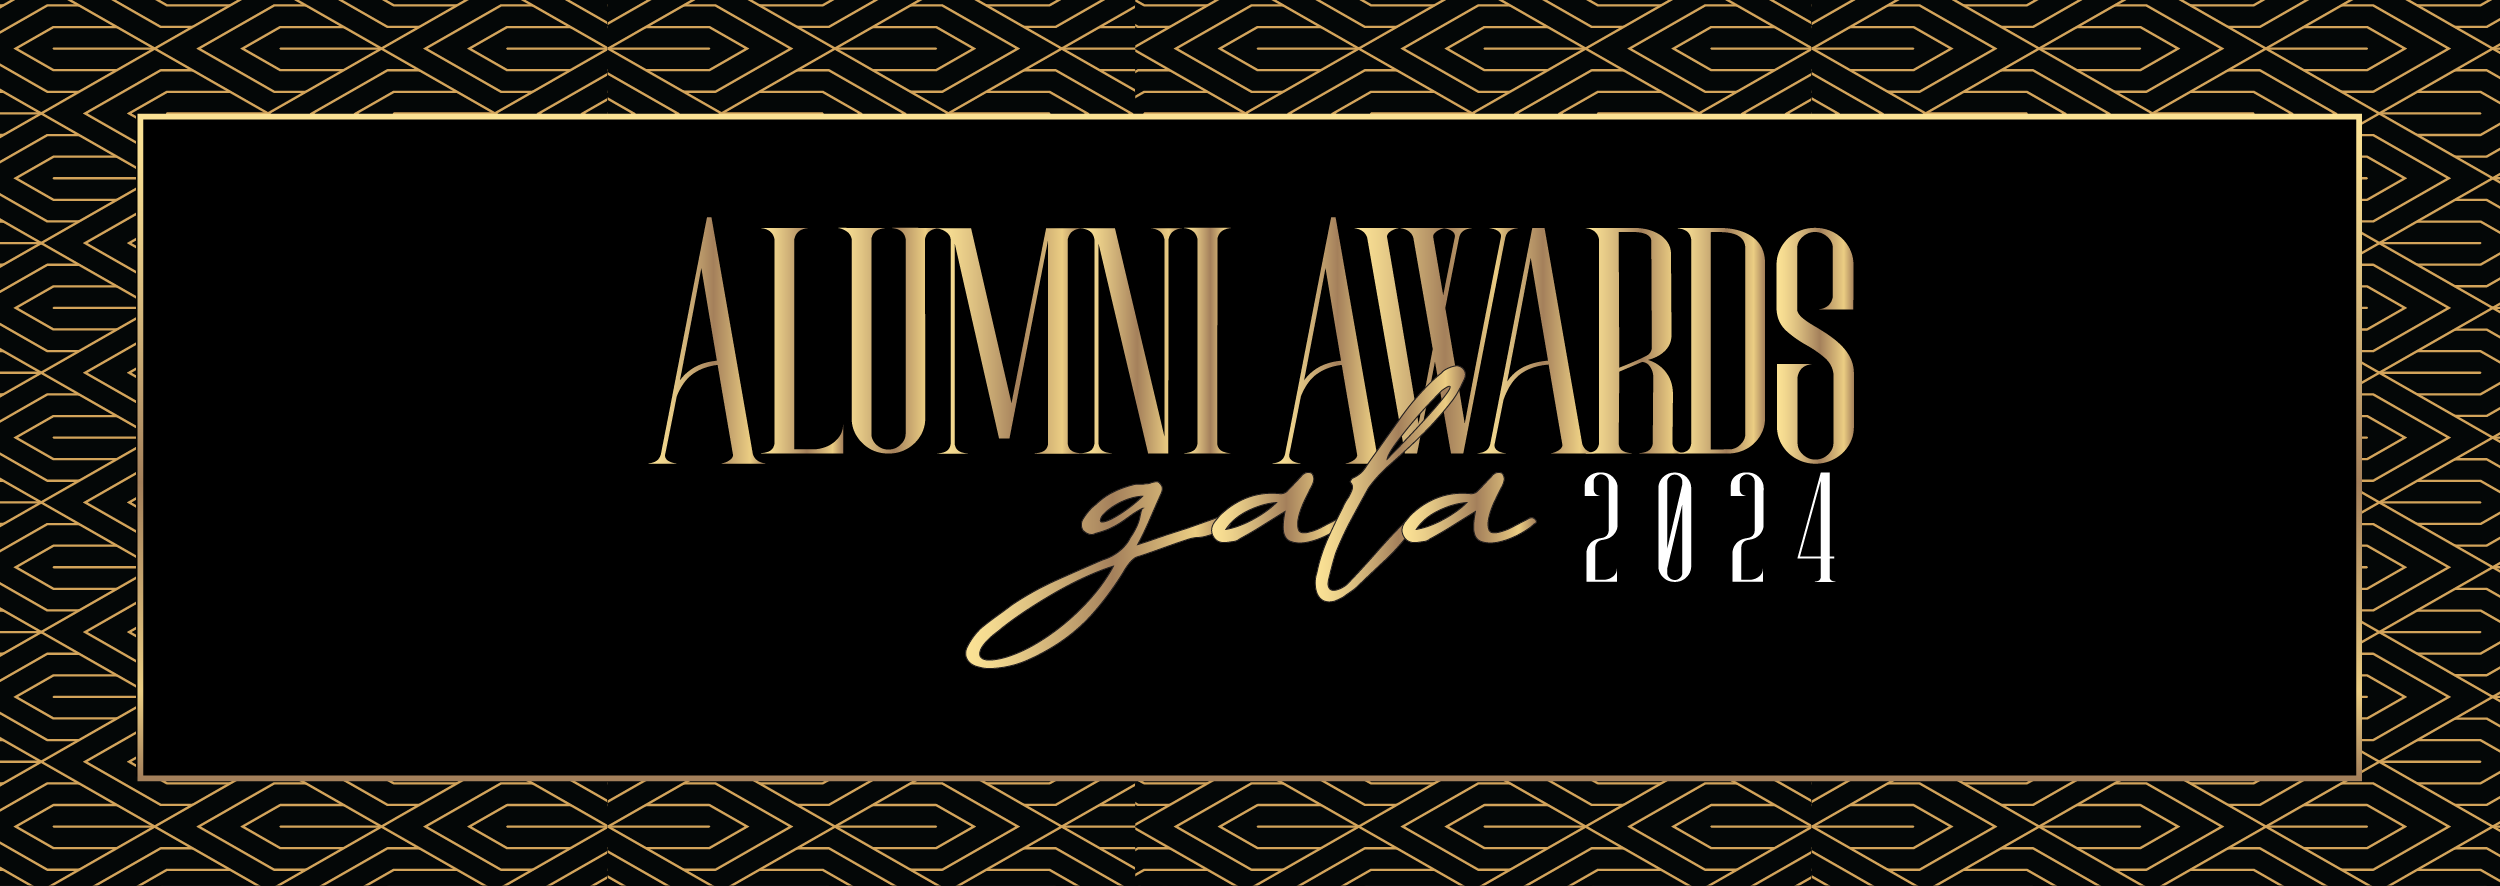 Alumni Awards Gala 2024 Banner